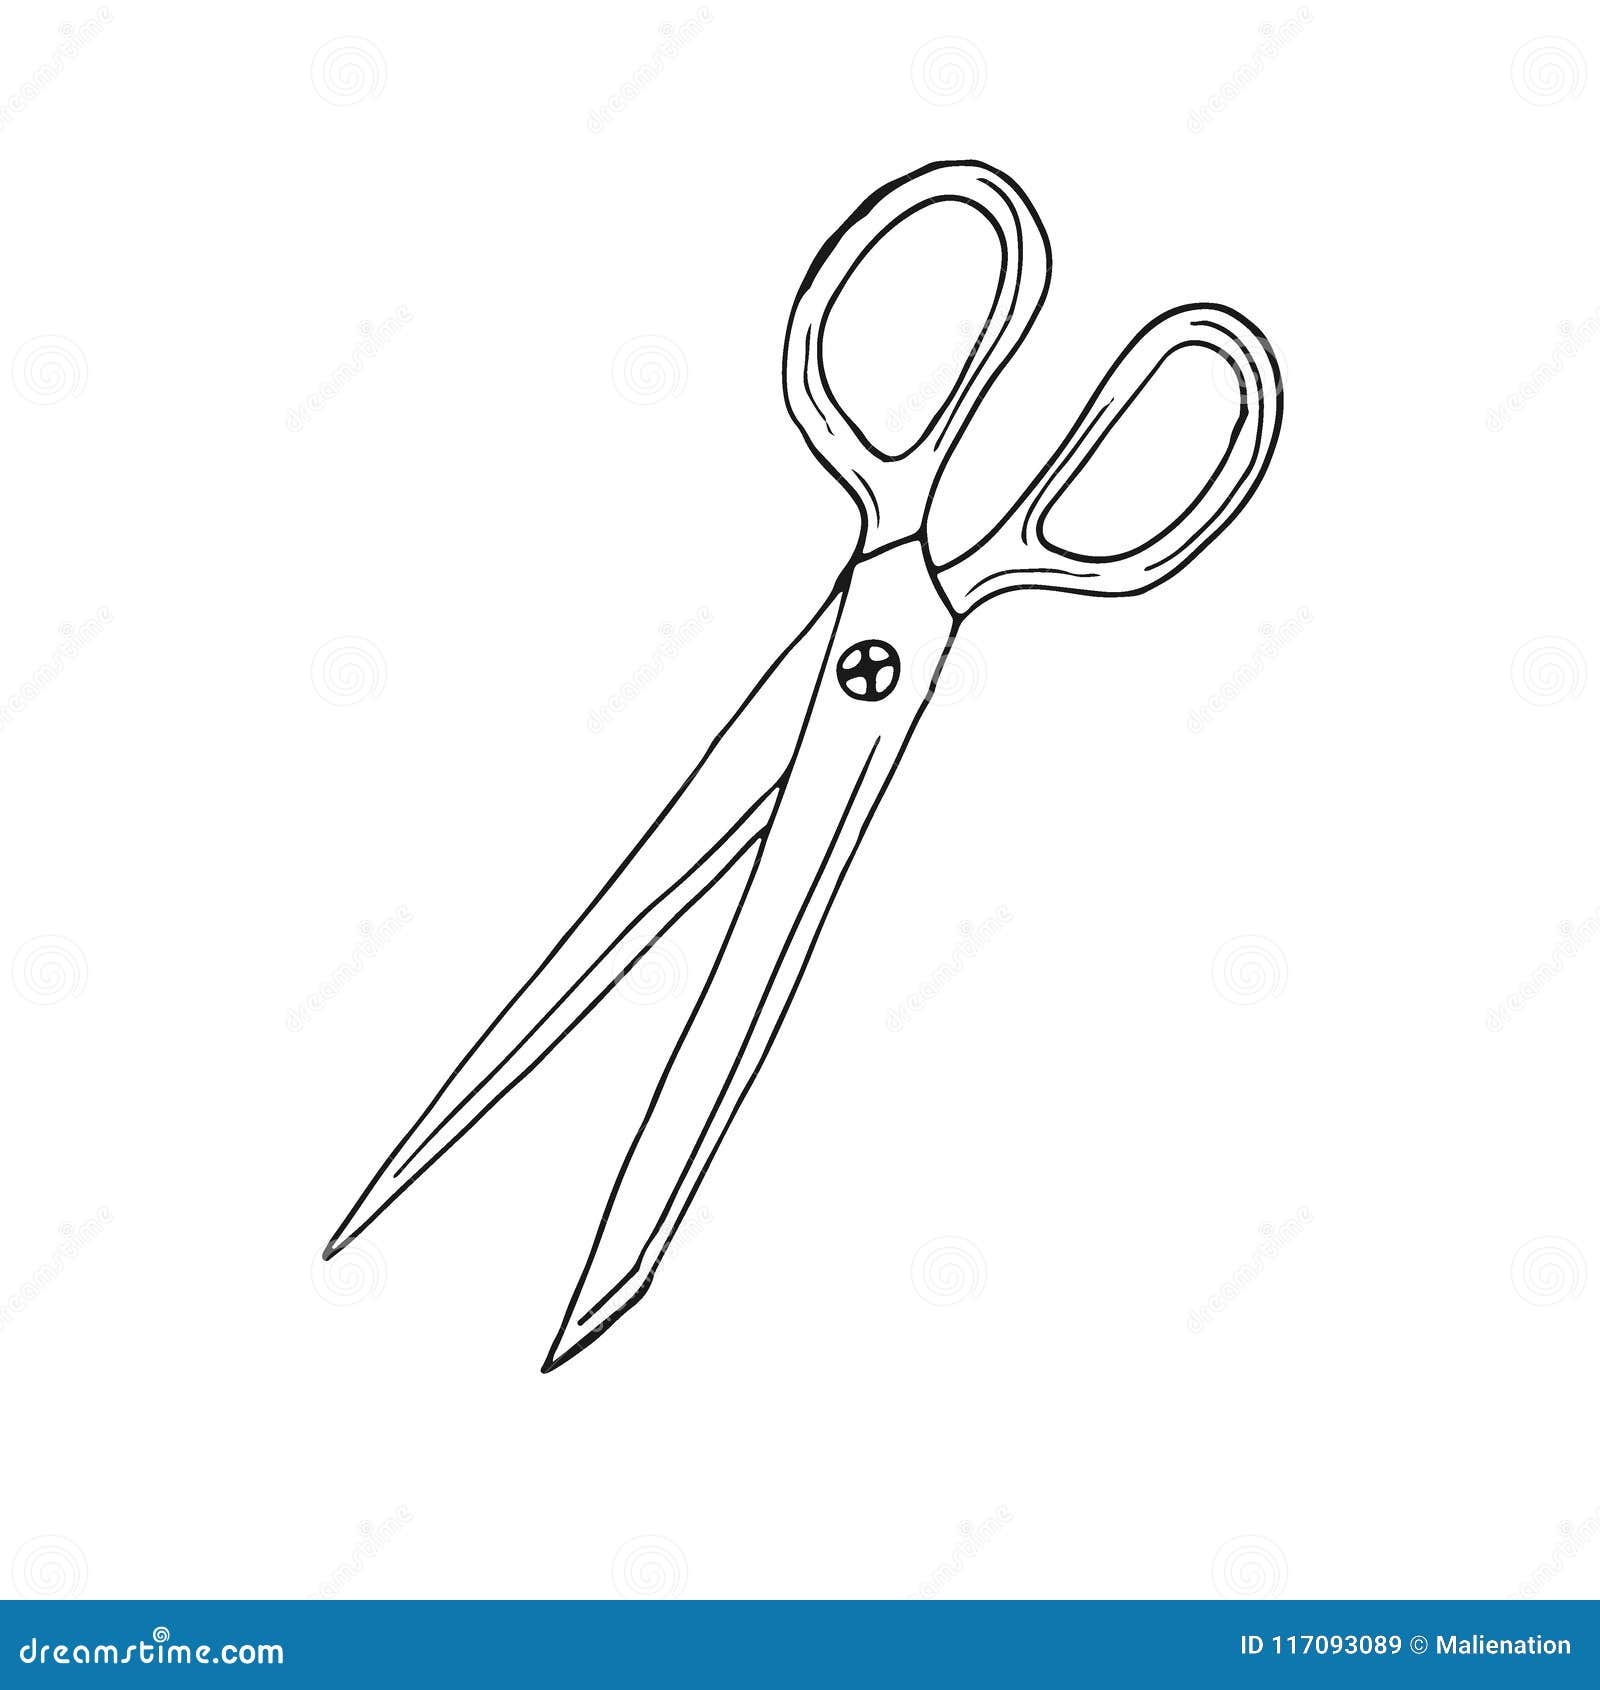 Scissors | Scissors drawing, Doodle art for beginners, Cute easy drawings